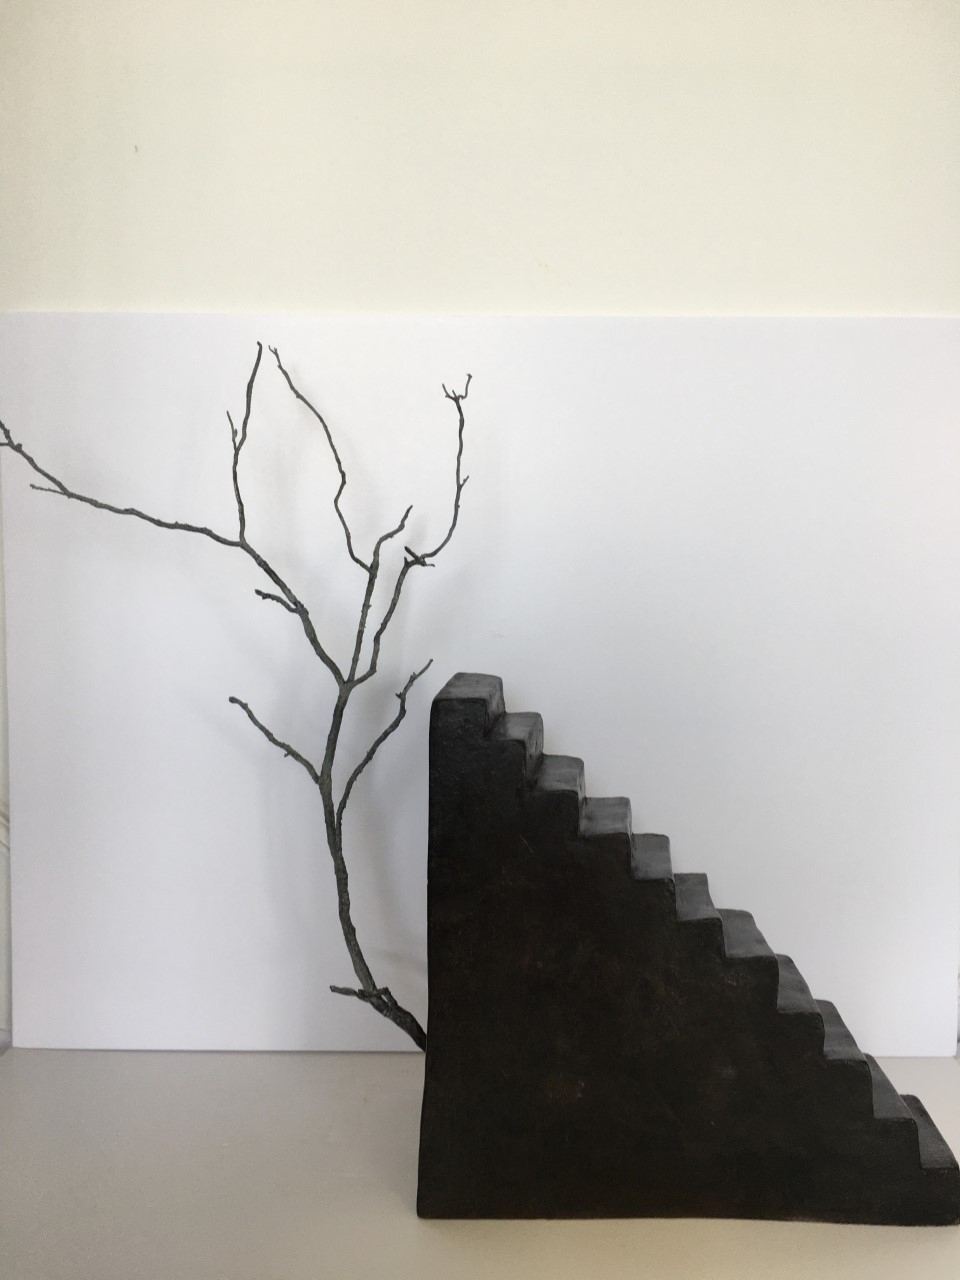 Escalier - arbre